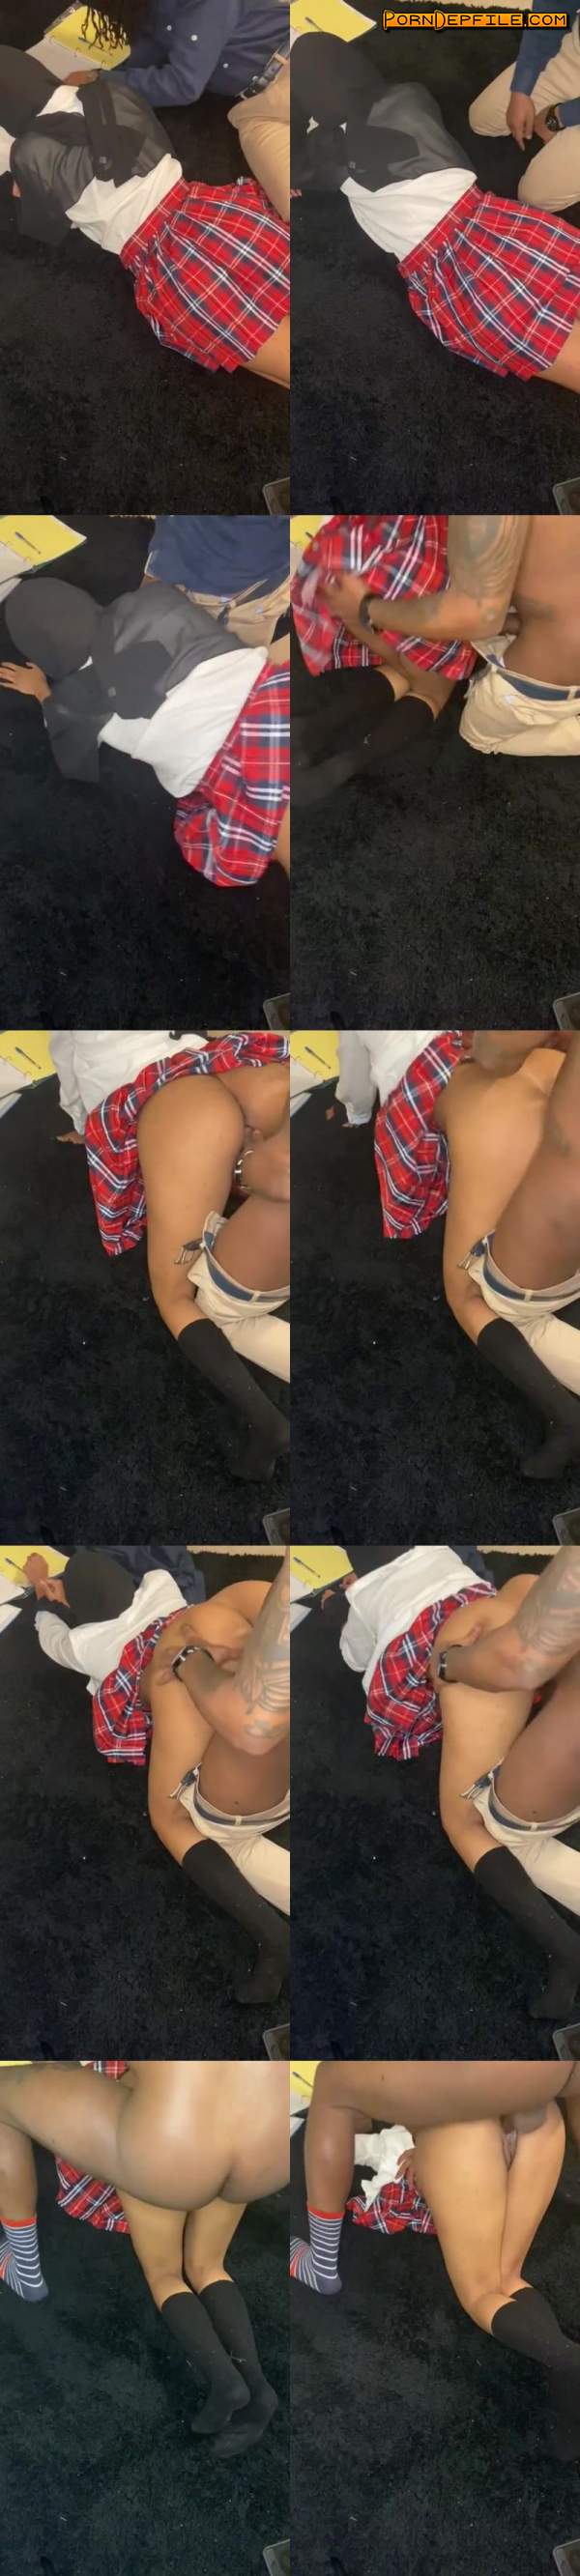 Pornhub, YOMamaLoves69: Muslim Schoolgirl And Classmate Fuck During Study Session (Skinny, Ebony, Big Ass, Big Tits) 720p